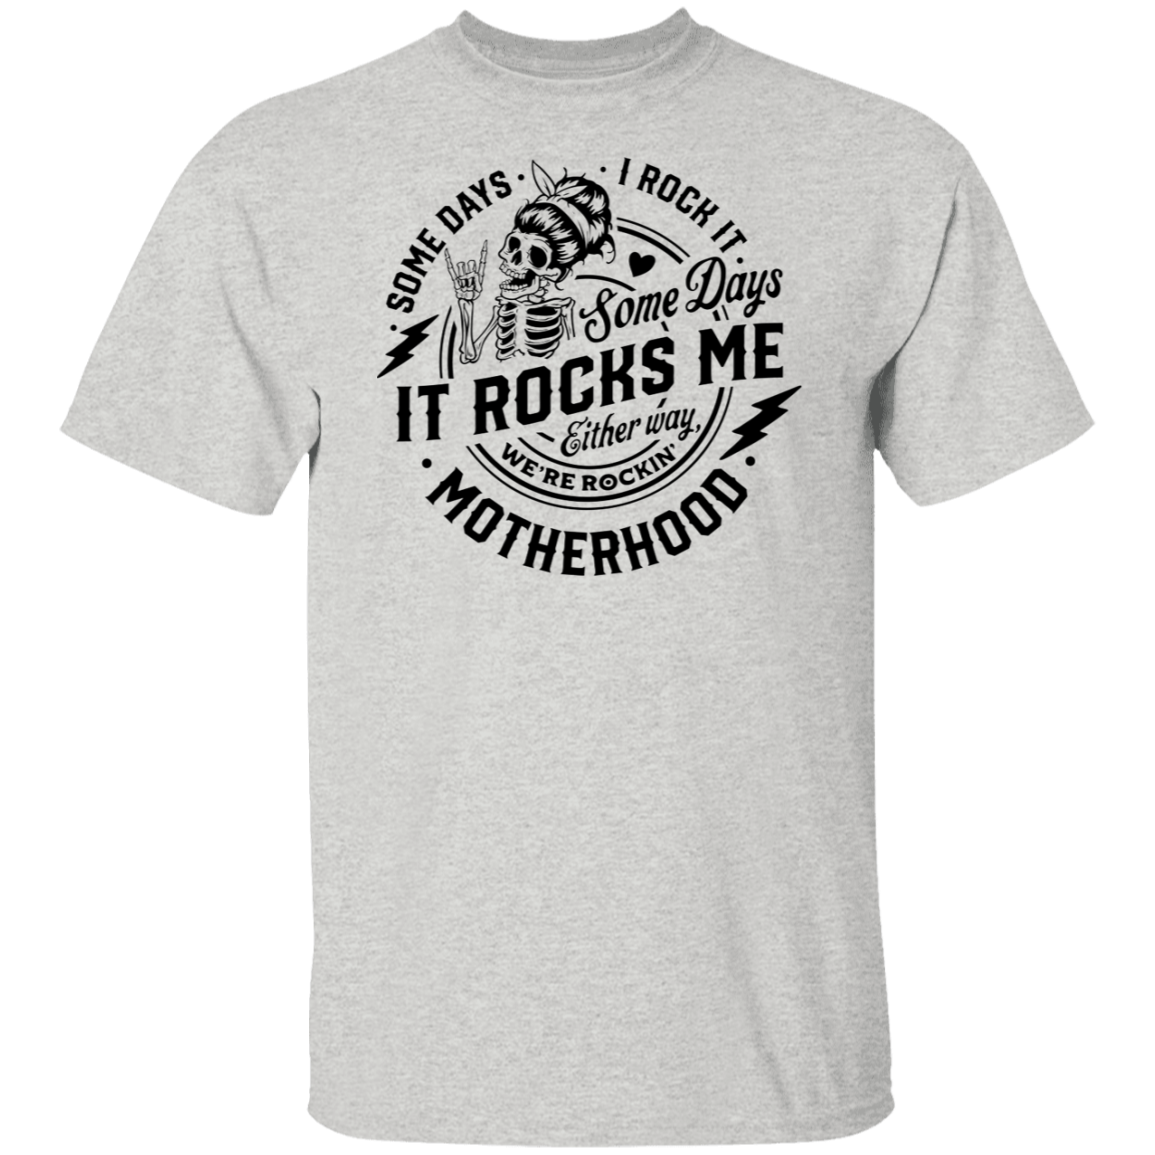 Some Days I Rock Motherhood Somedays It Rocks Me  T-Shirt